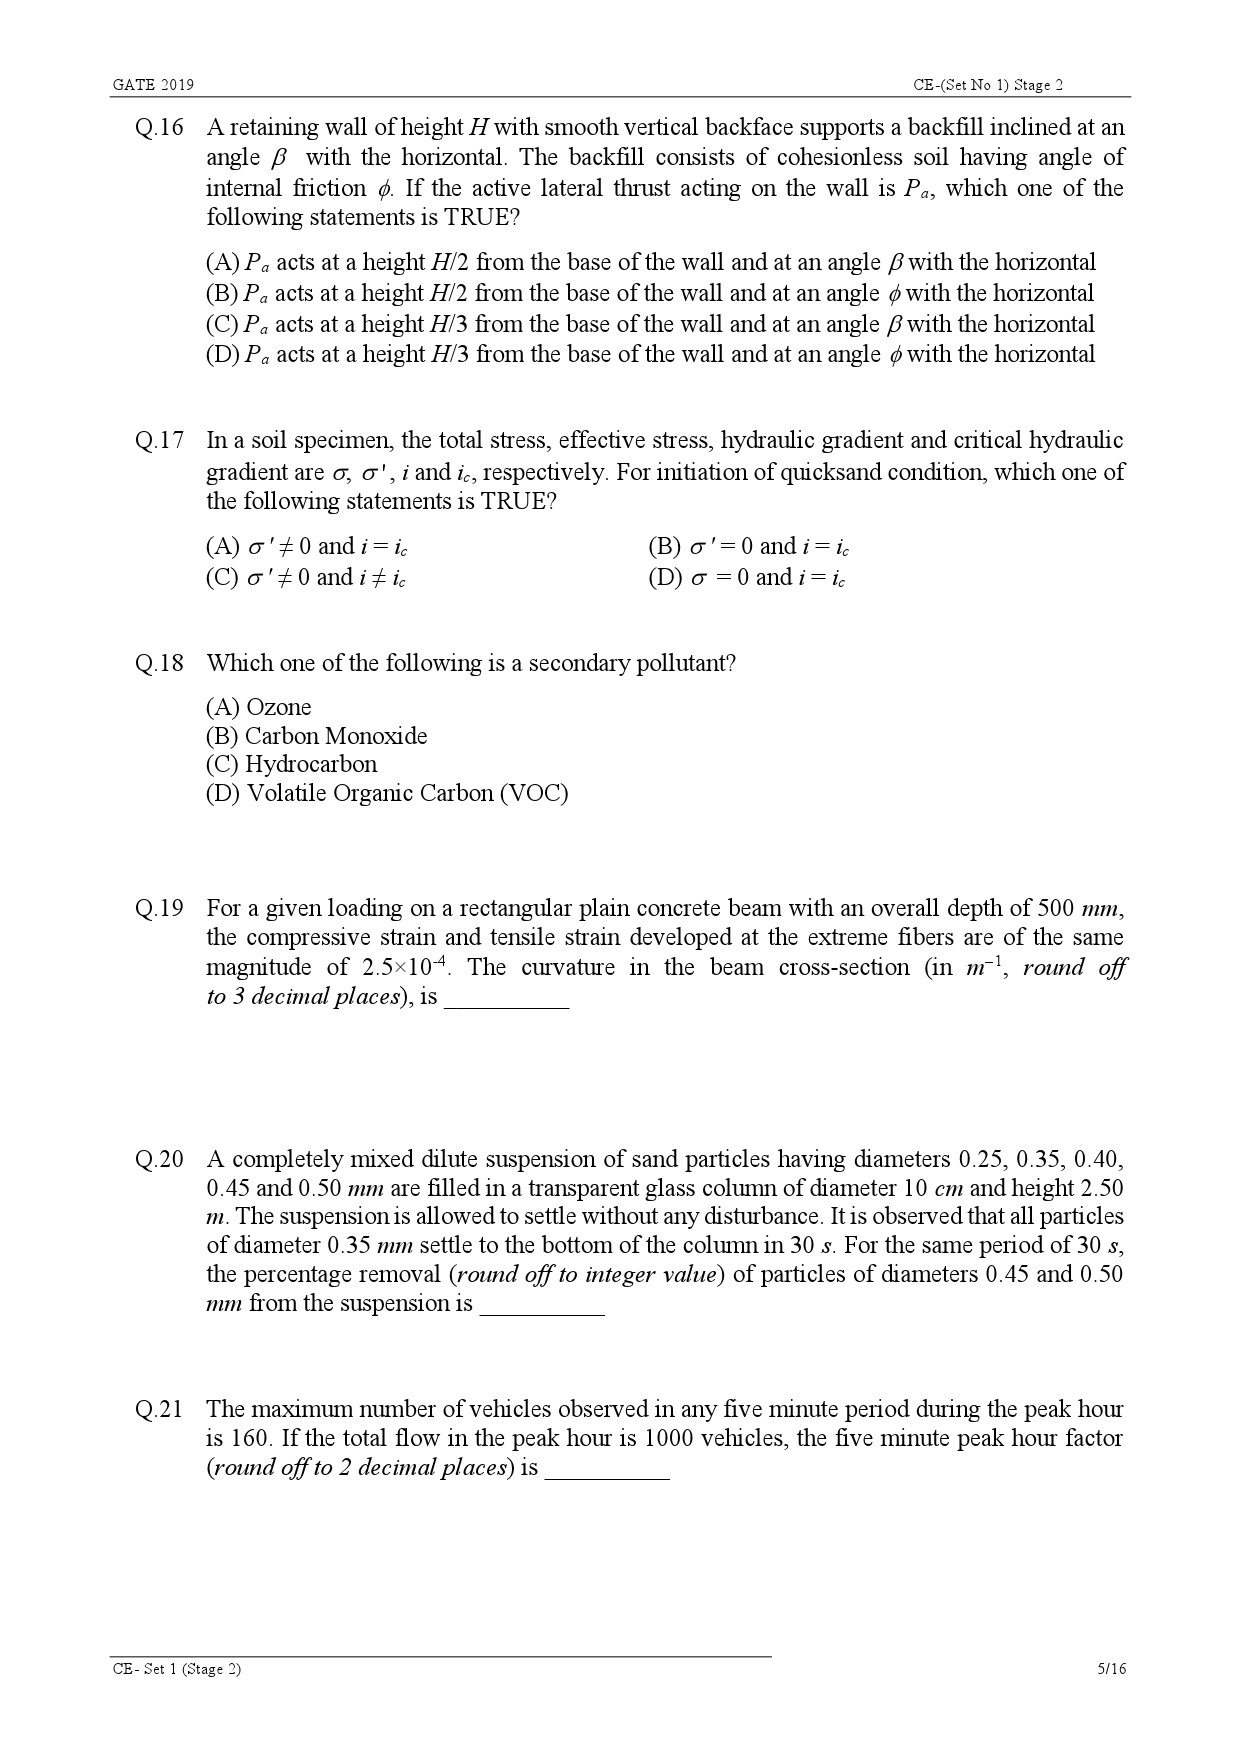 GATE Exam Question Paper 2019 Civil Engineering Set 1 8